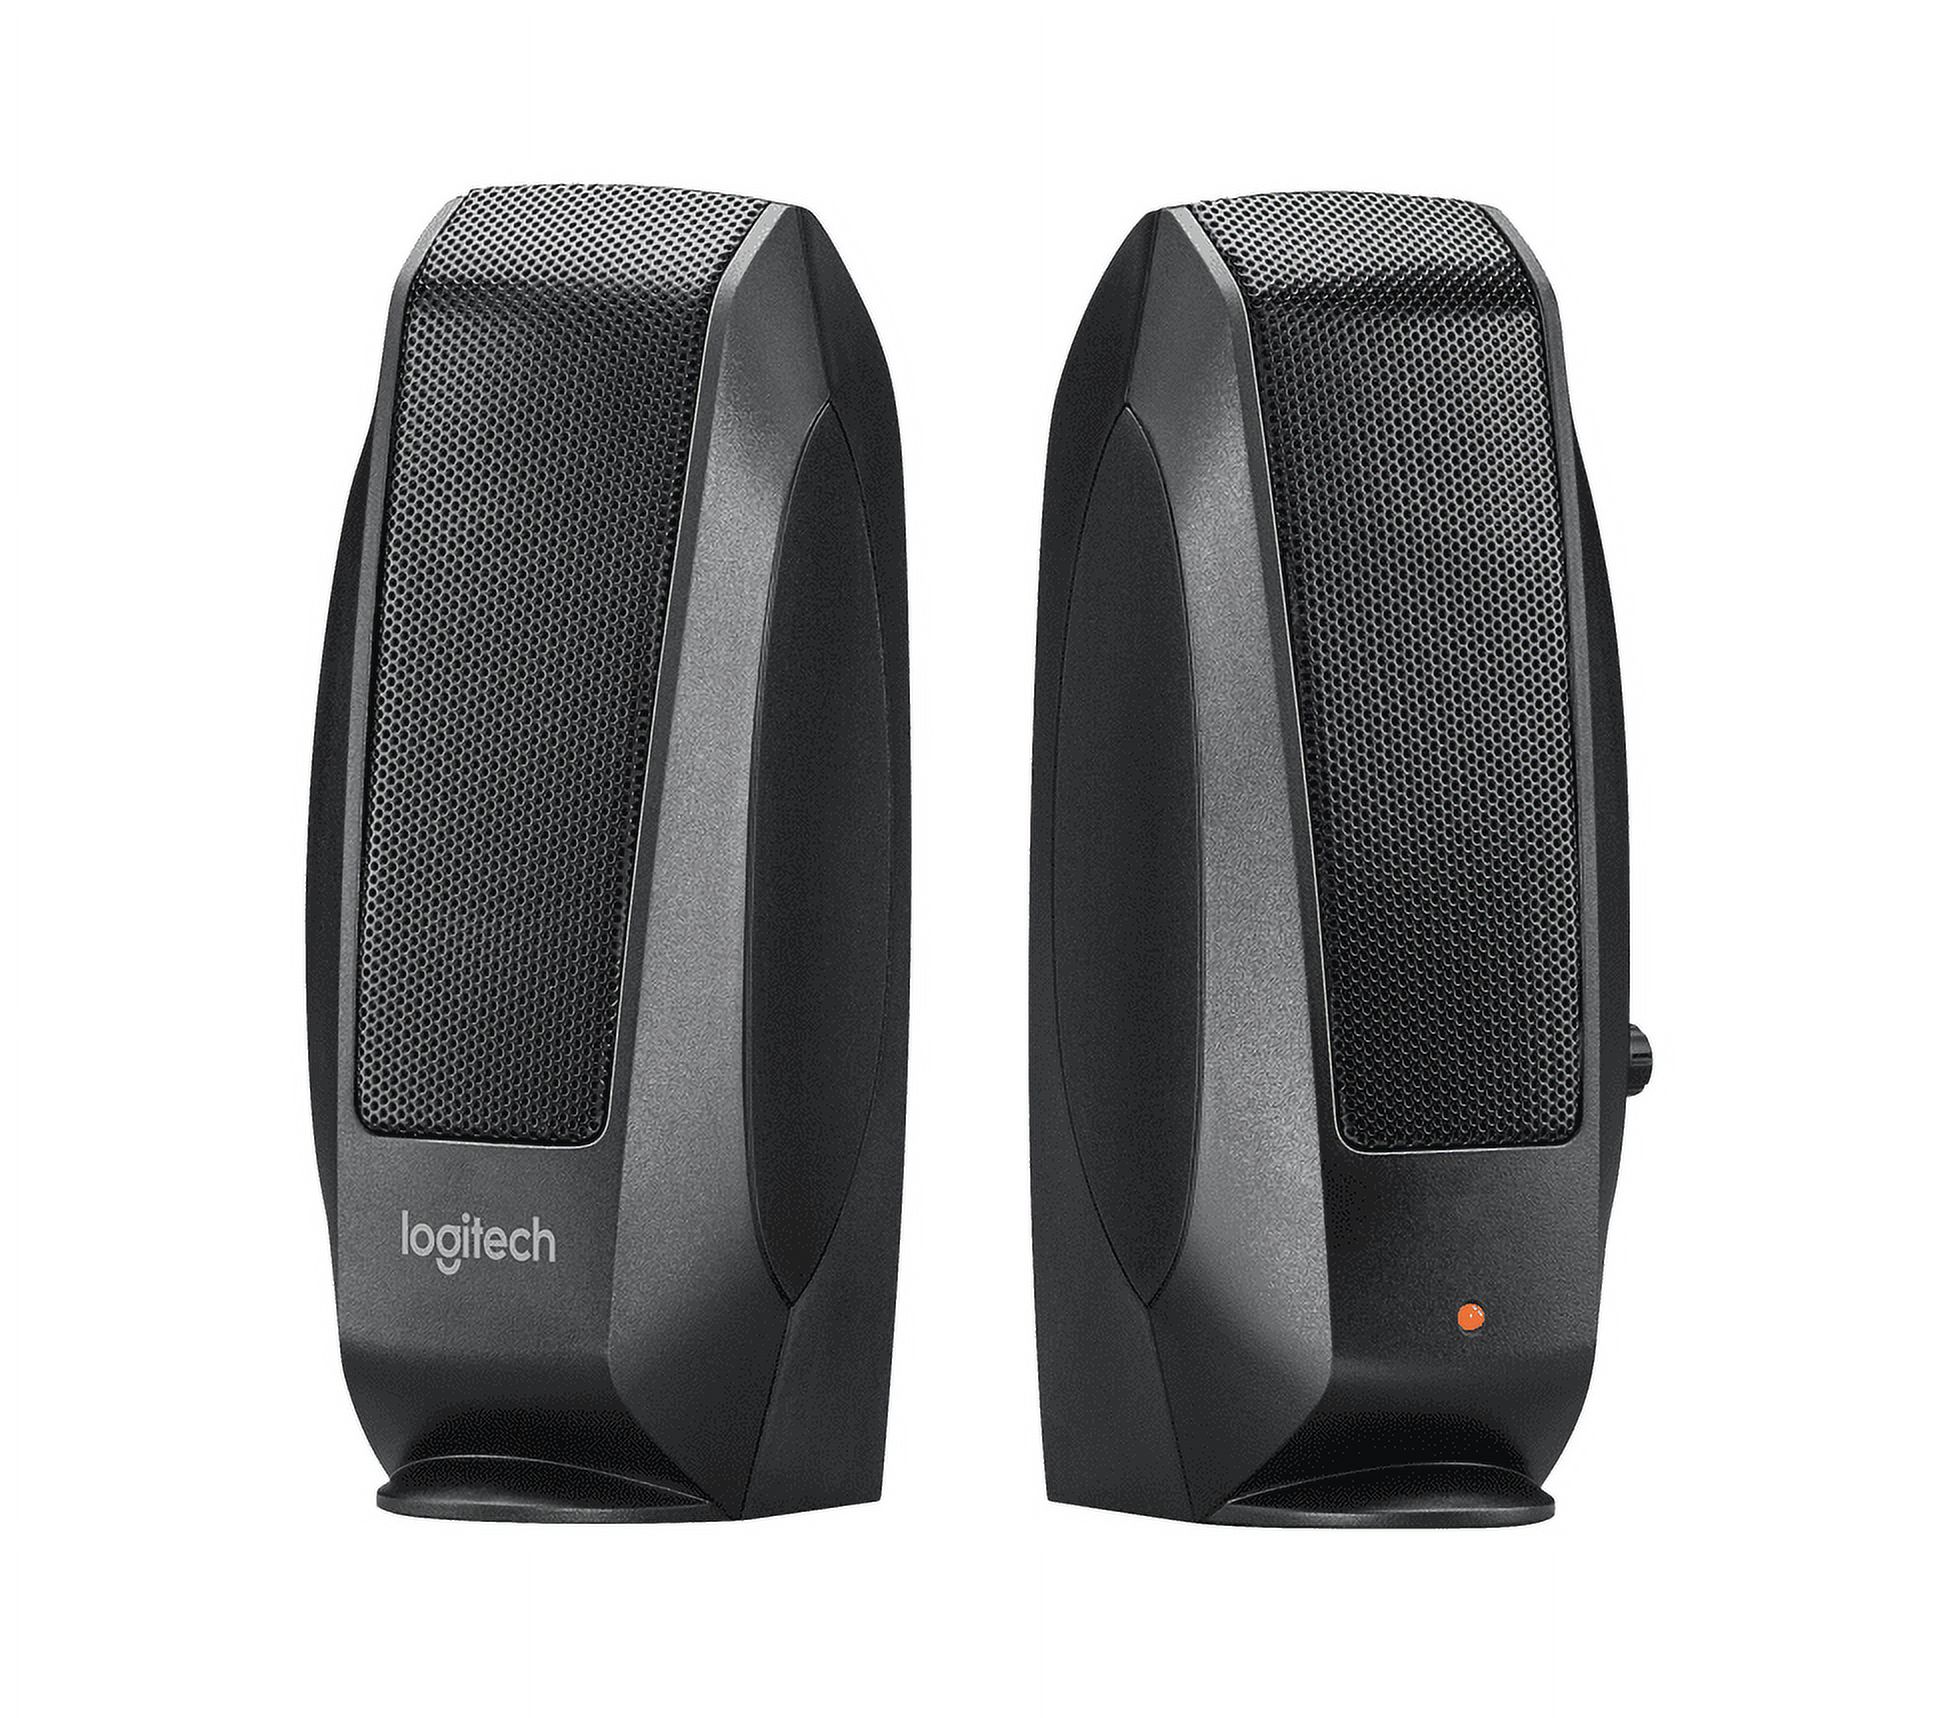 Logitech S120 Desktop Speaker System, Black - image 2 of 3